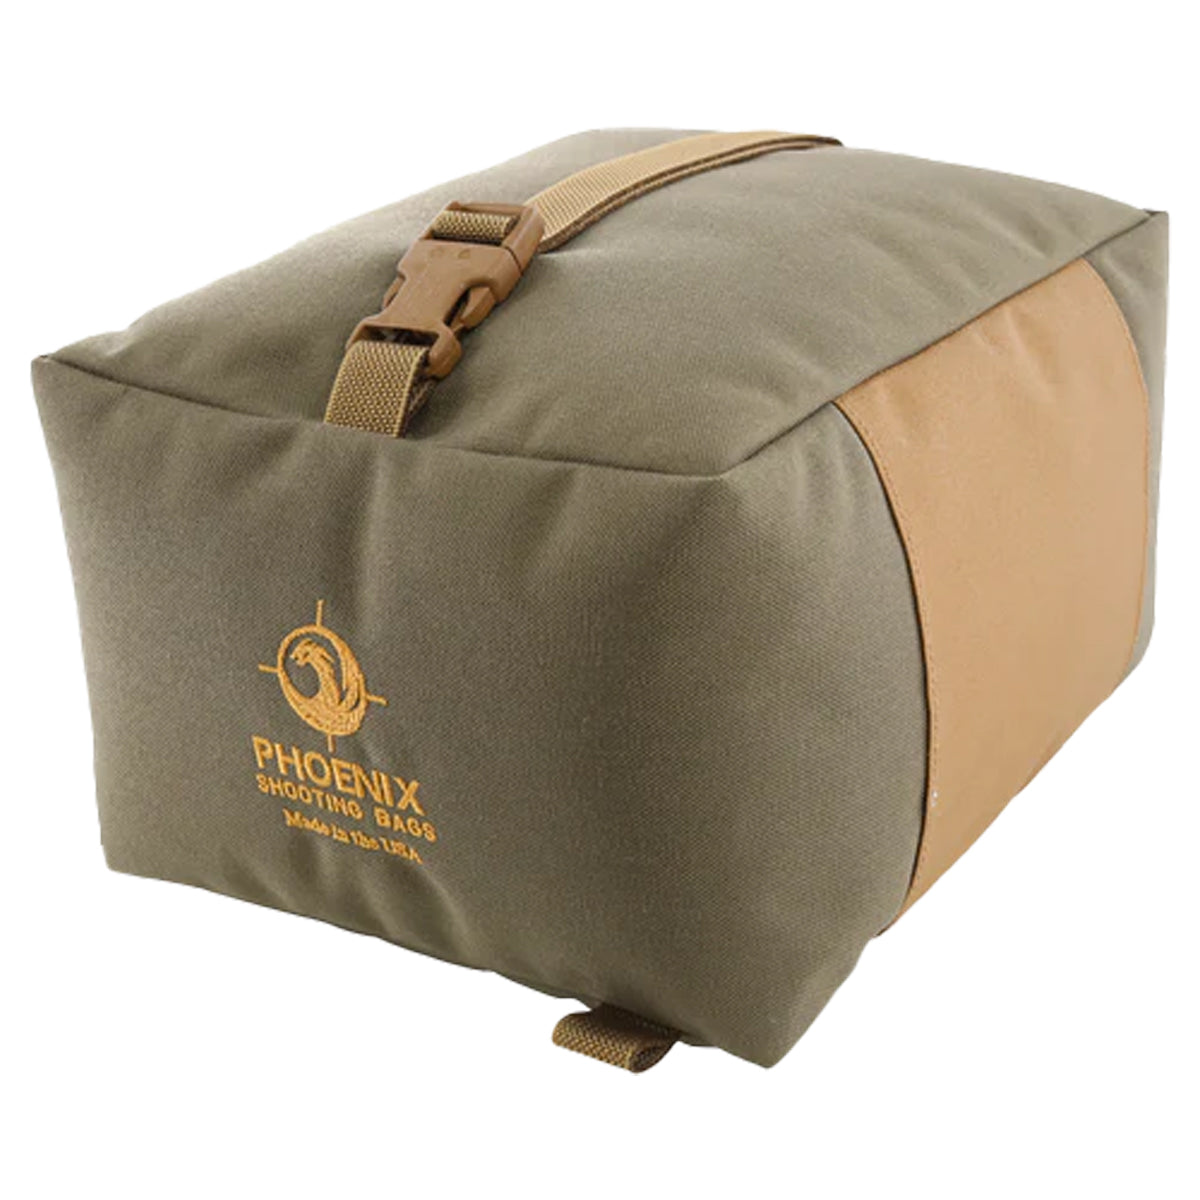 Phoenix Shooting Bags Large Bag (The Ultimate Rest) in Ranger Green by GOHUNT | Phoenix Shooting Bags - GOHUNT Shop